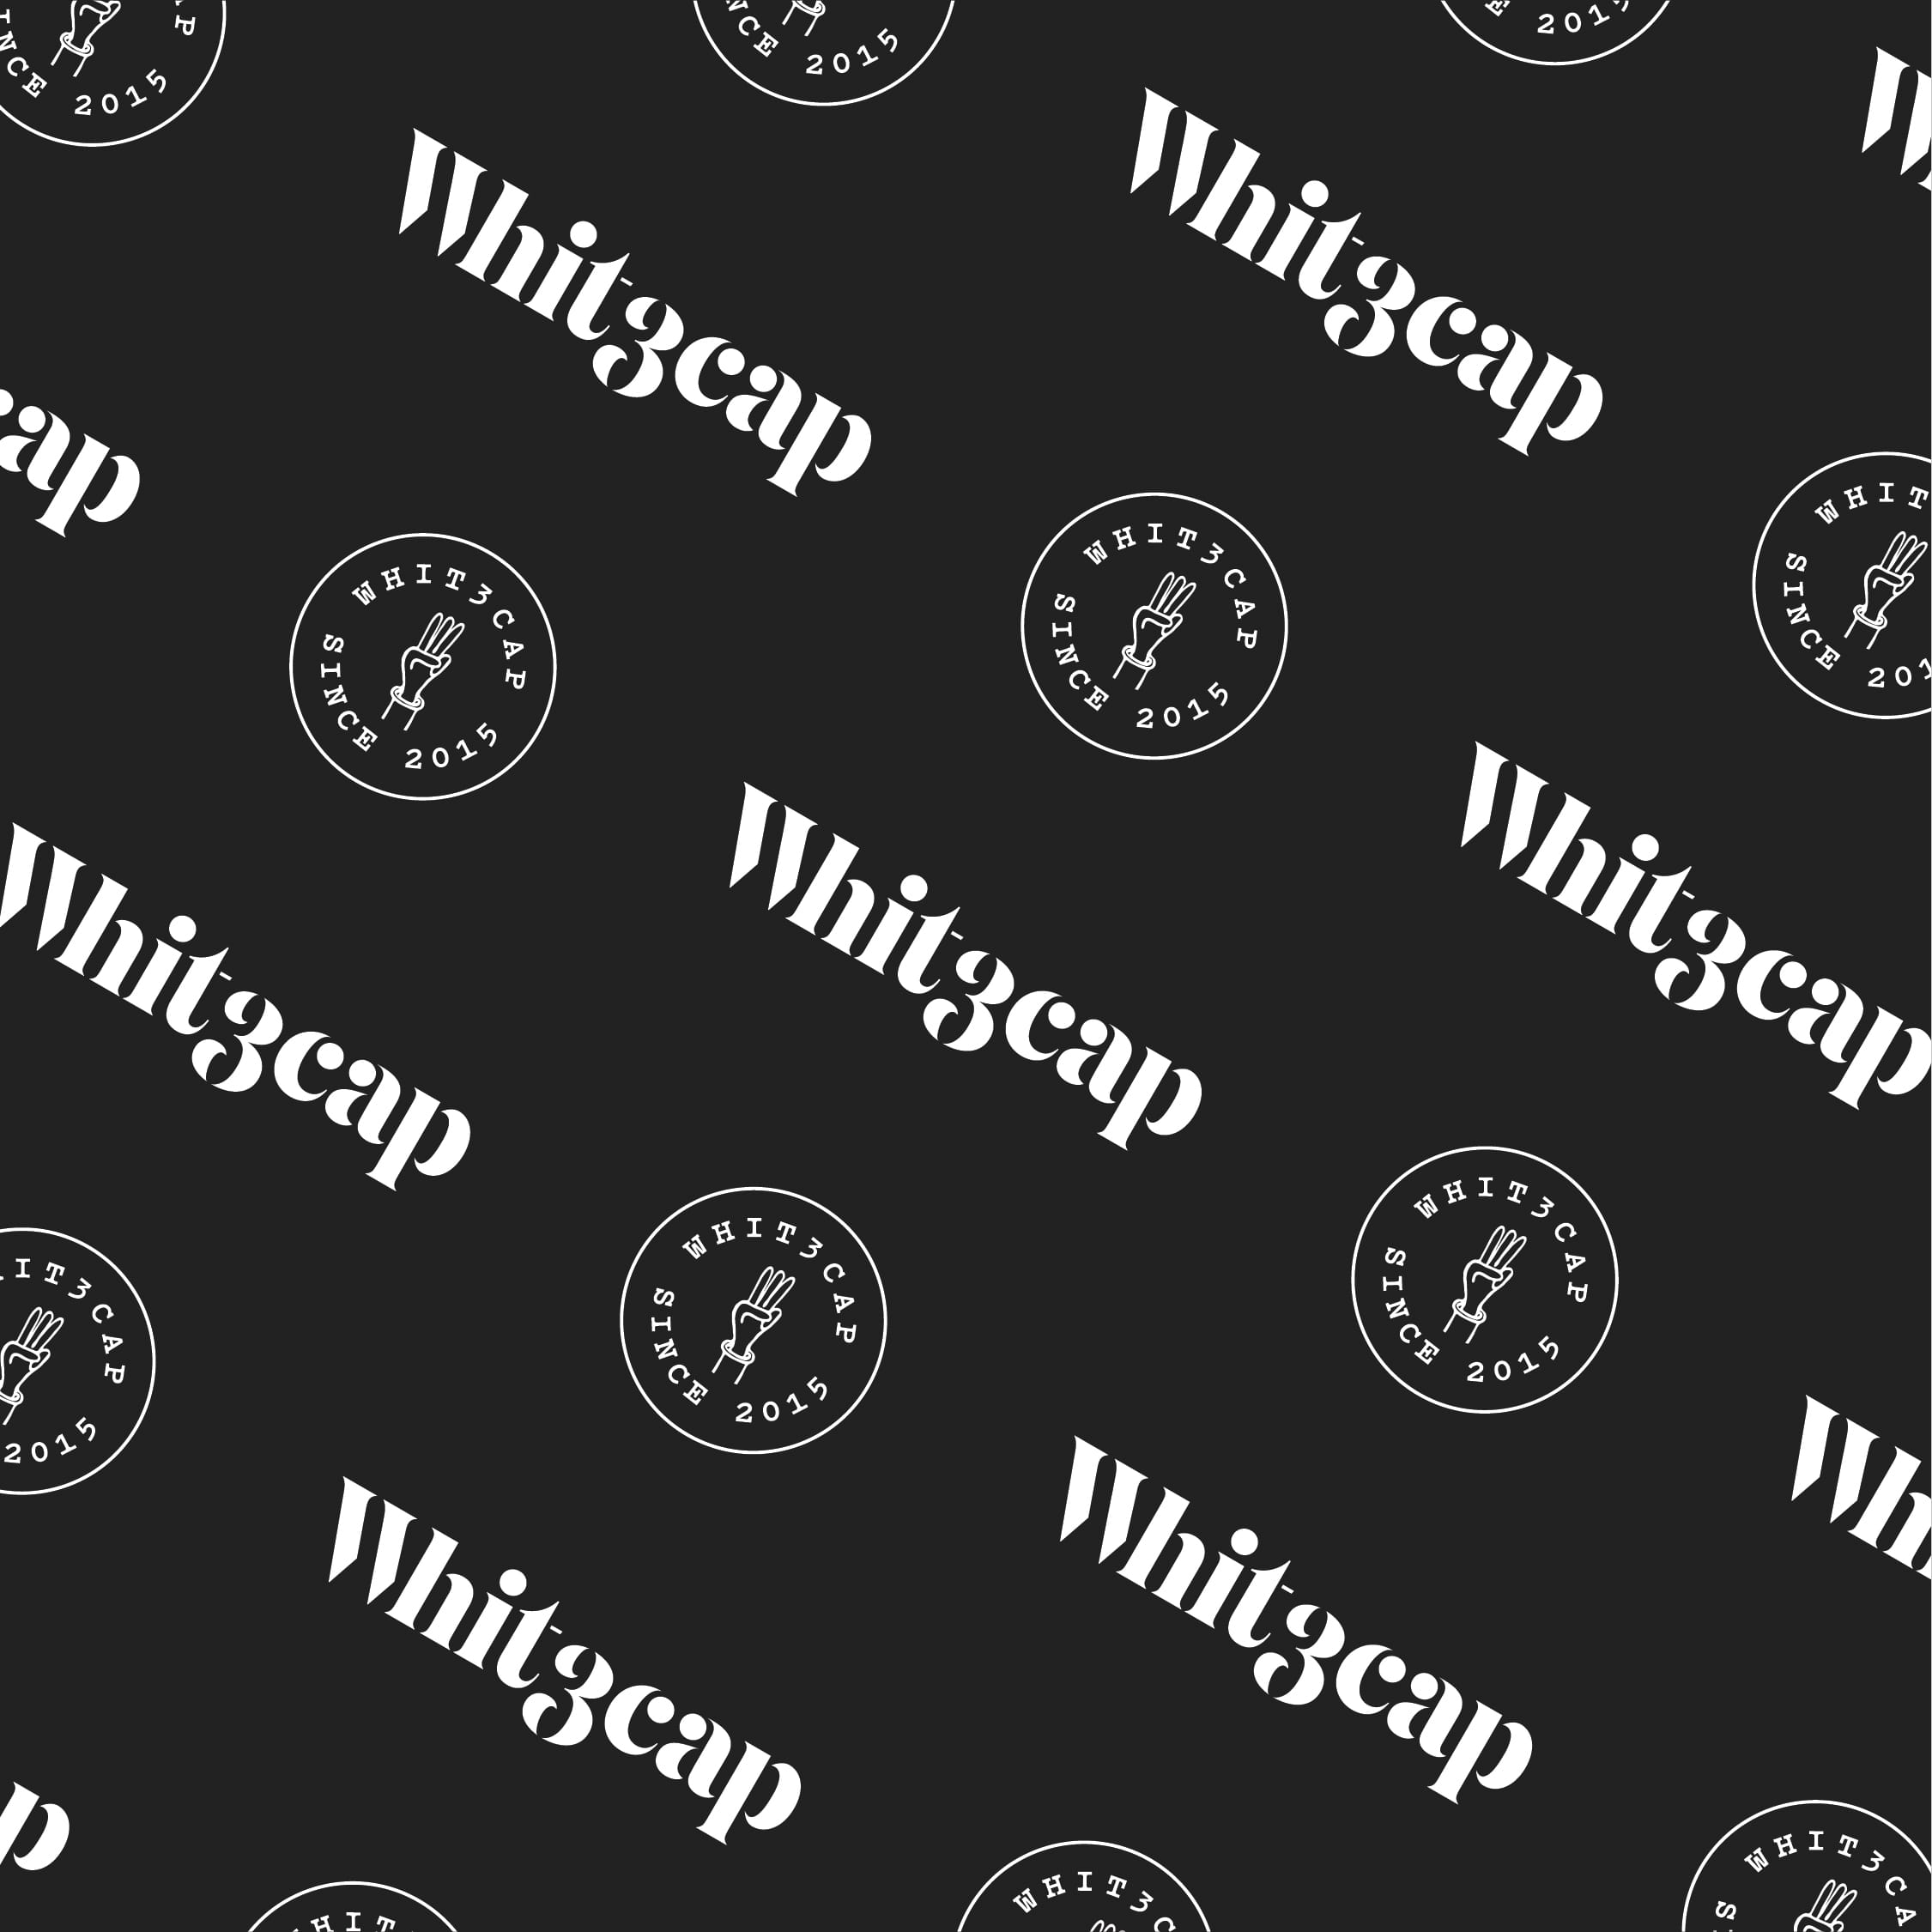 Whitecap 3rd anniversary logos